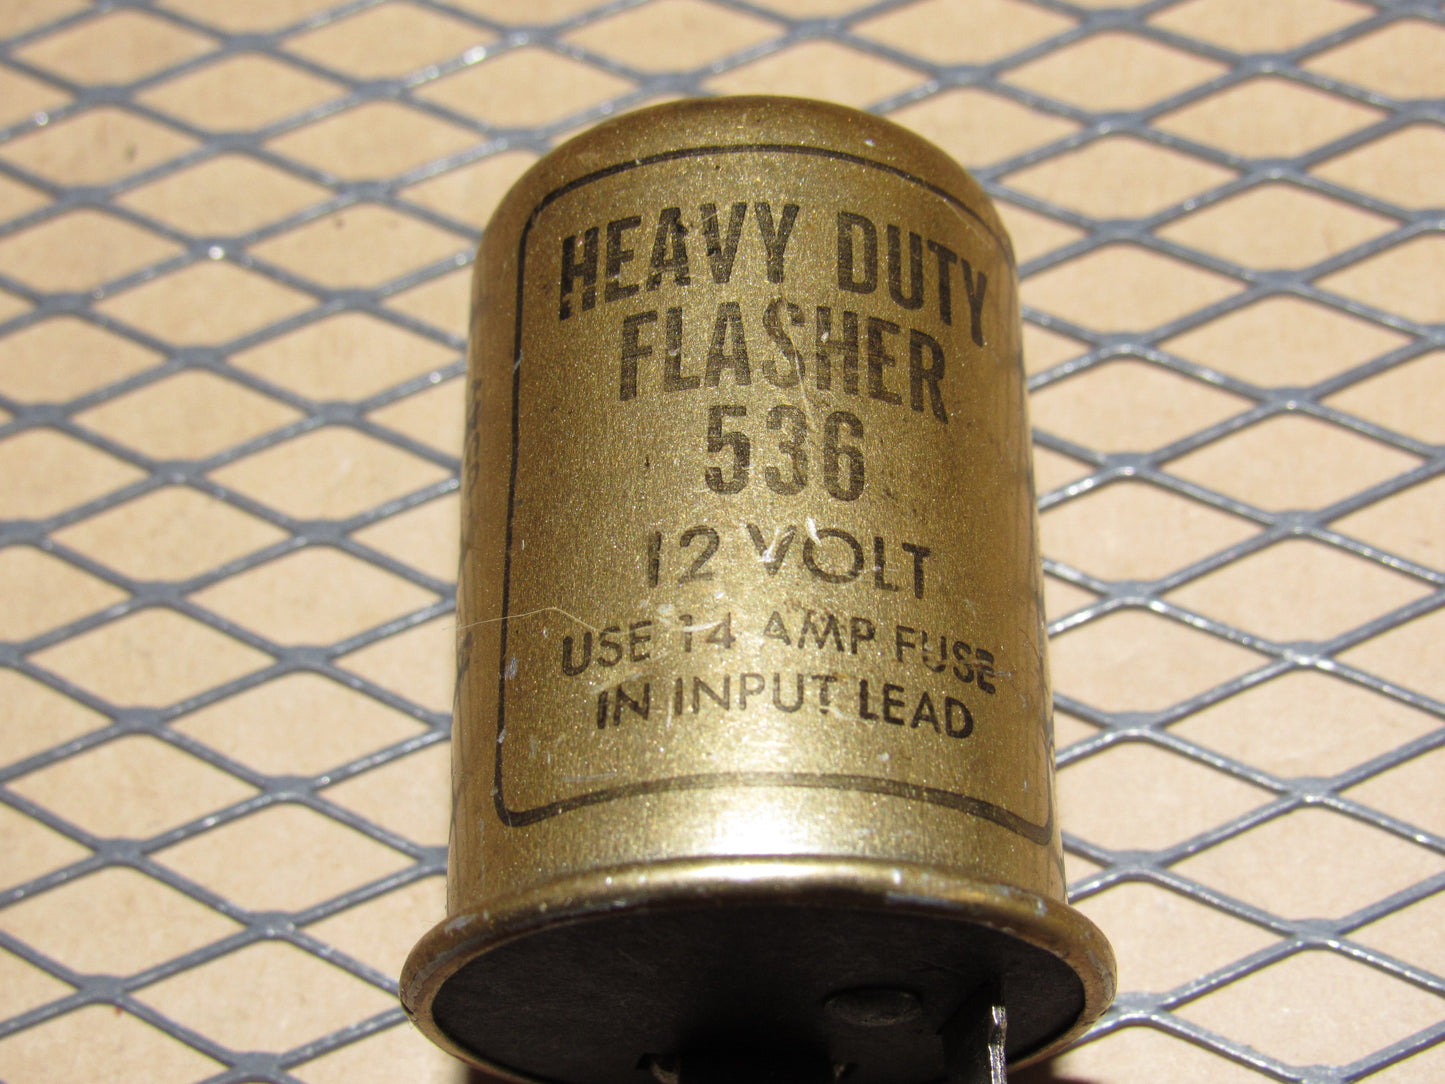 Datsun Heavy Duty Flasher Relay 536 12 Volt